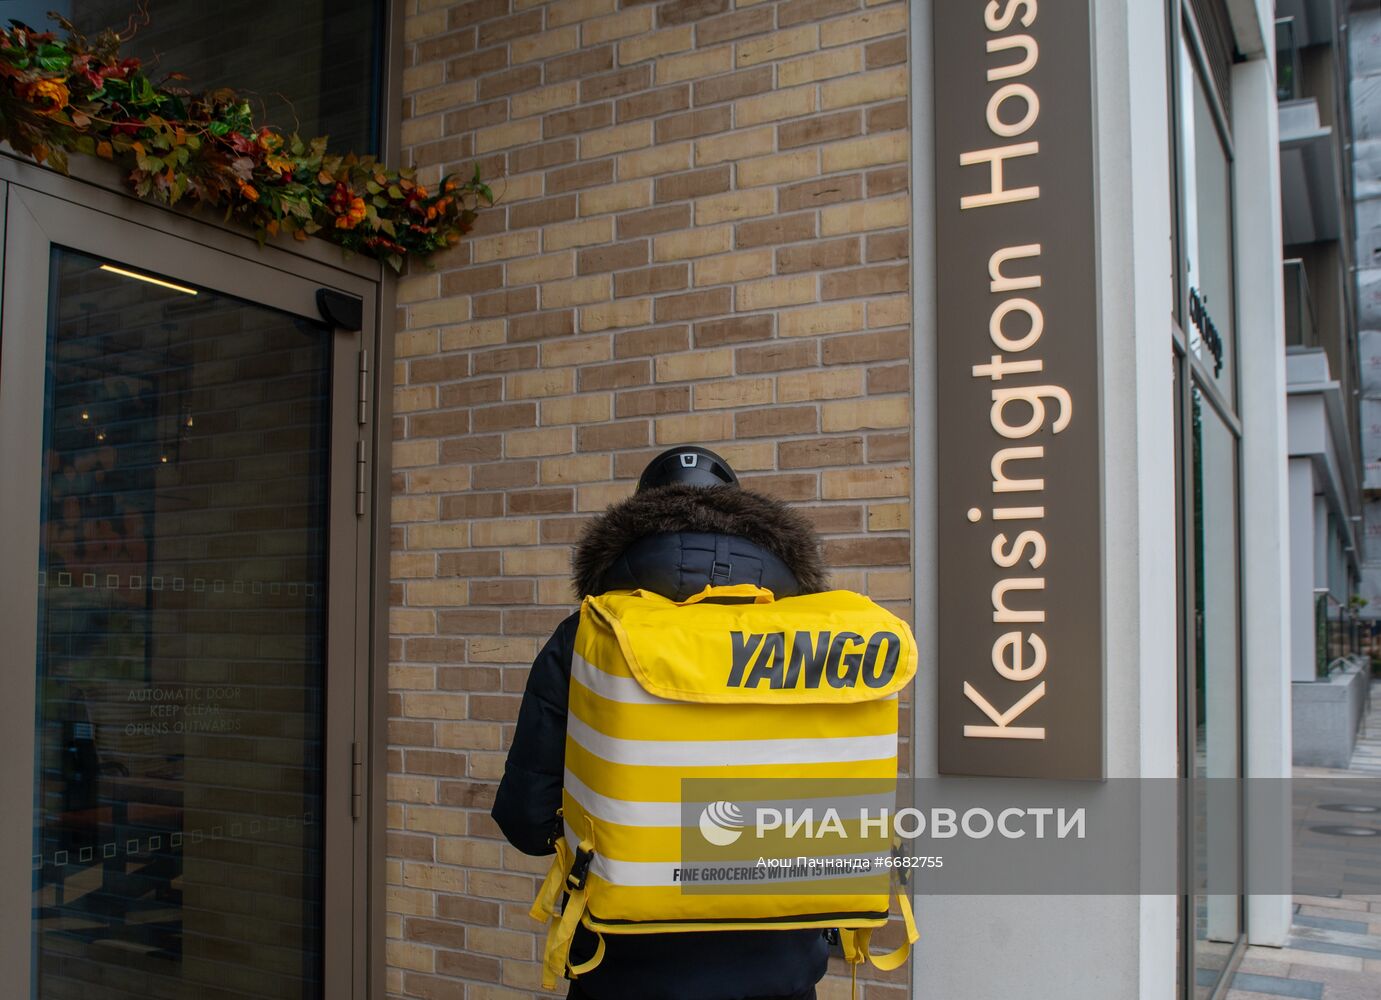 Работа сервисов "Яндекс.Лавка" и Yango Deli в Москве и Лондоне